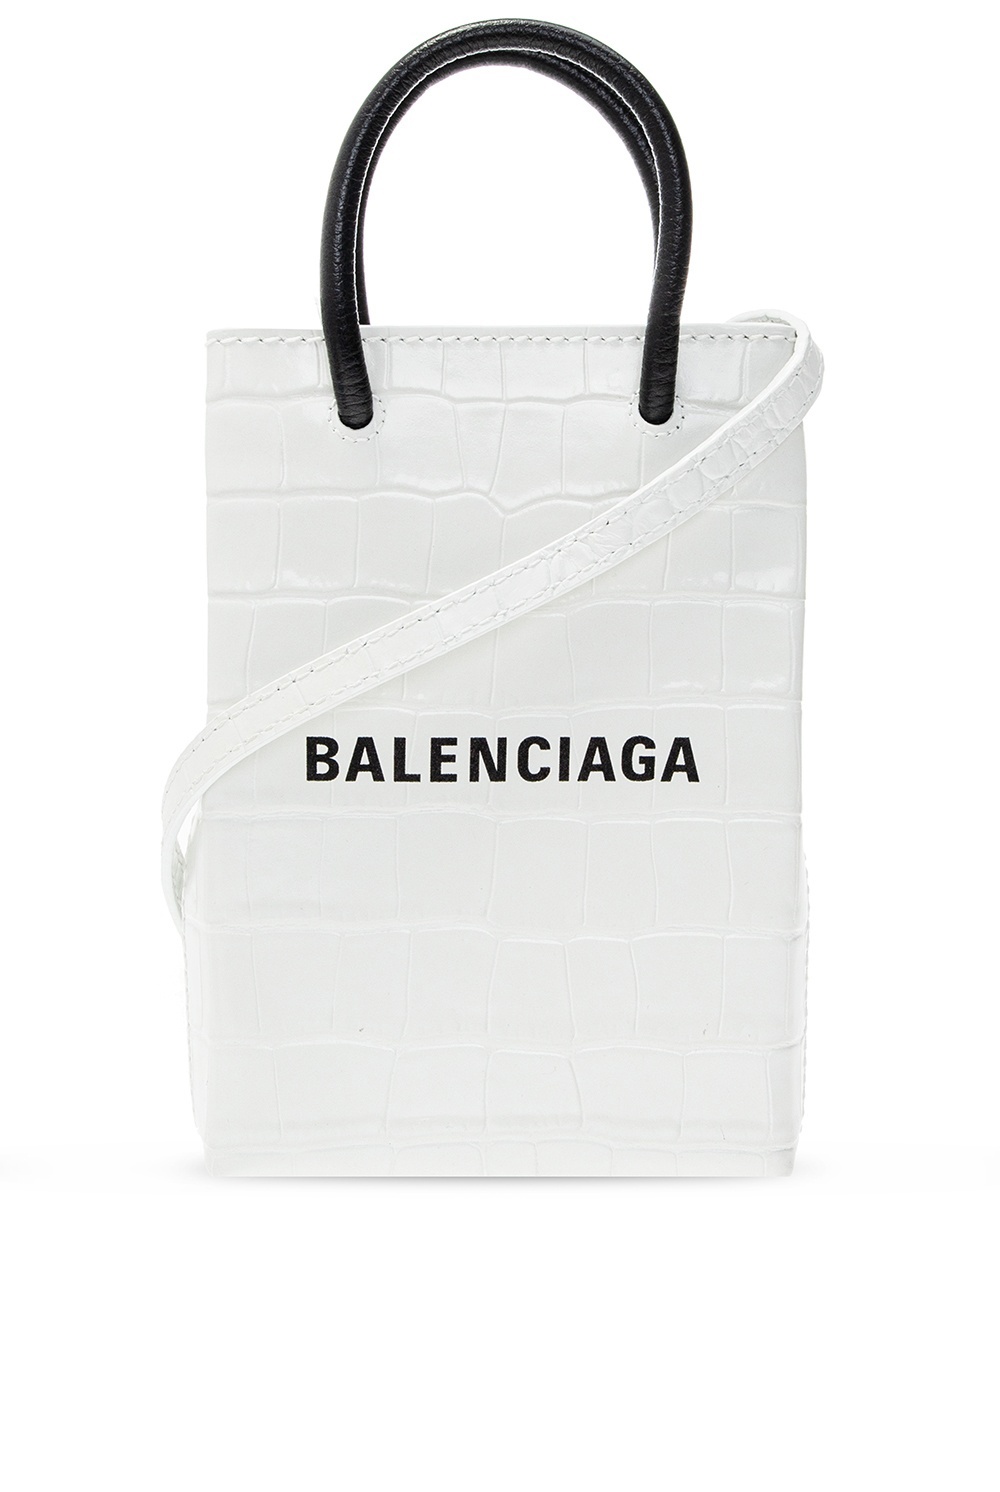 Balenciaga Phone Holder Hot Sale, UP TO 61% OFF | www.aramanatural.es